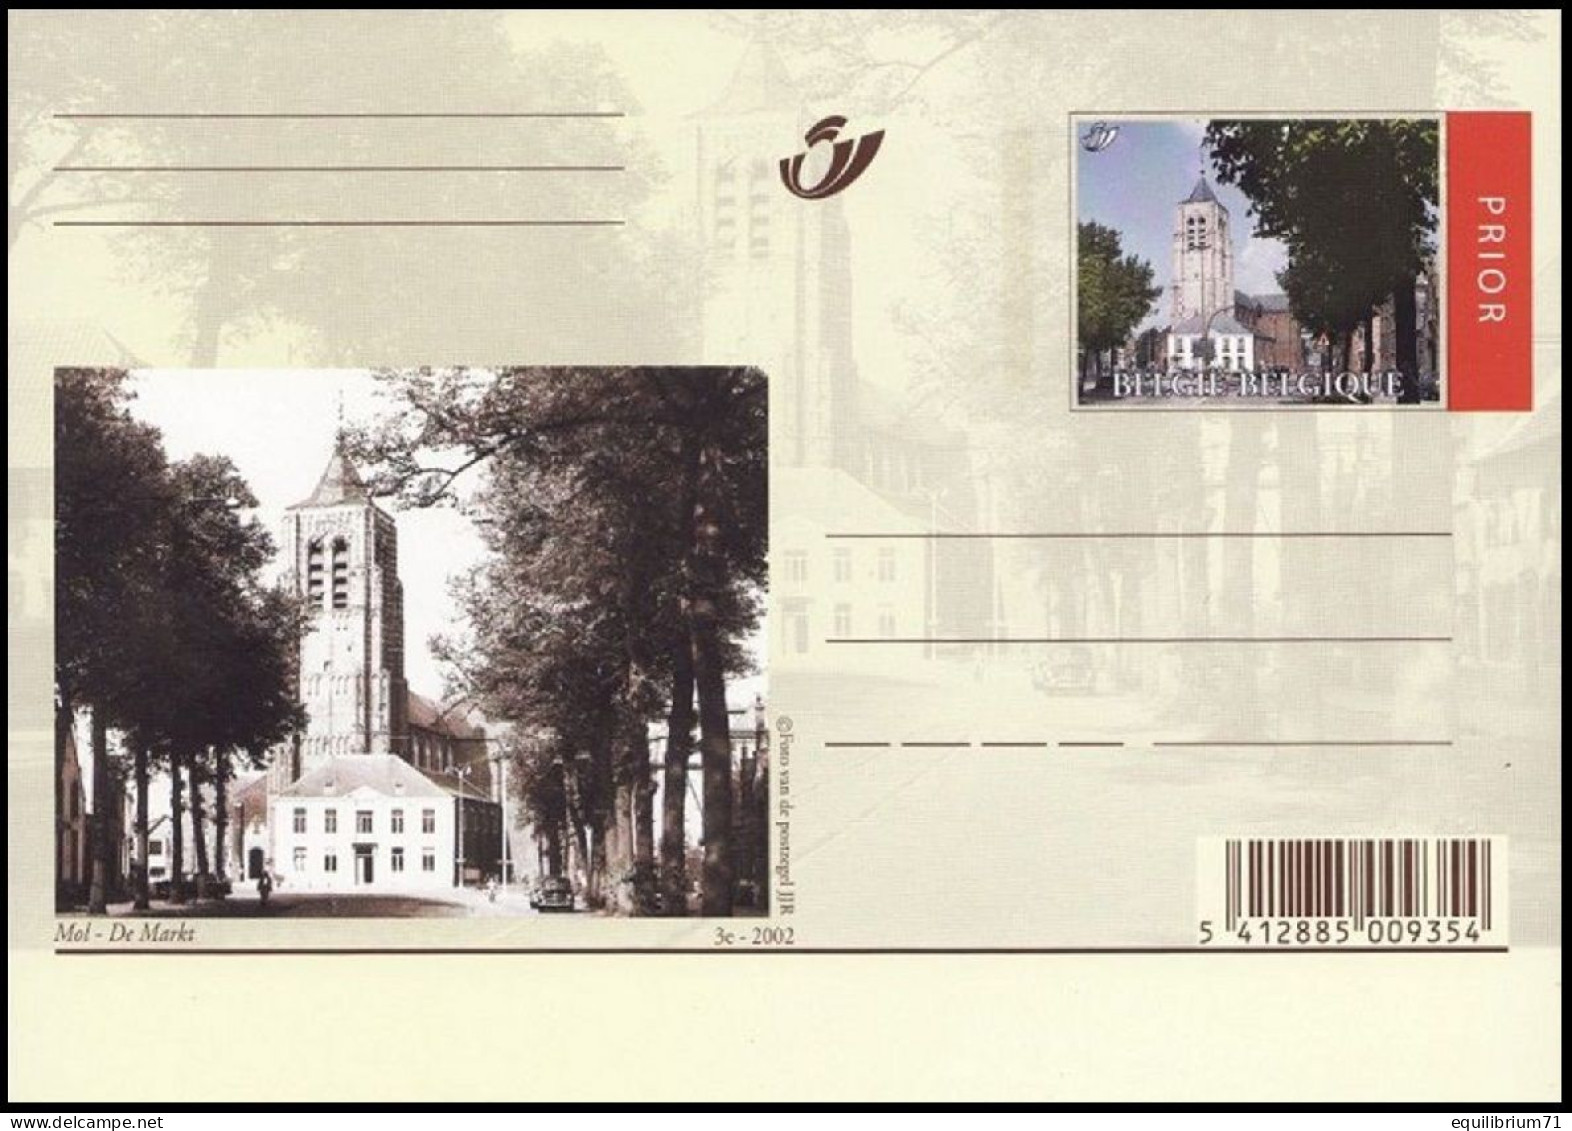 CP/BK83** - Cartes Illustrées/Geïllustreerde Briefkaarten/Illustrierte Postkarten - Autrefois & Maintenant/Vroeger En Nu - Illustrierte Postkarten (1971-2014) [BK]